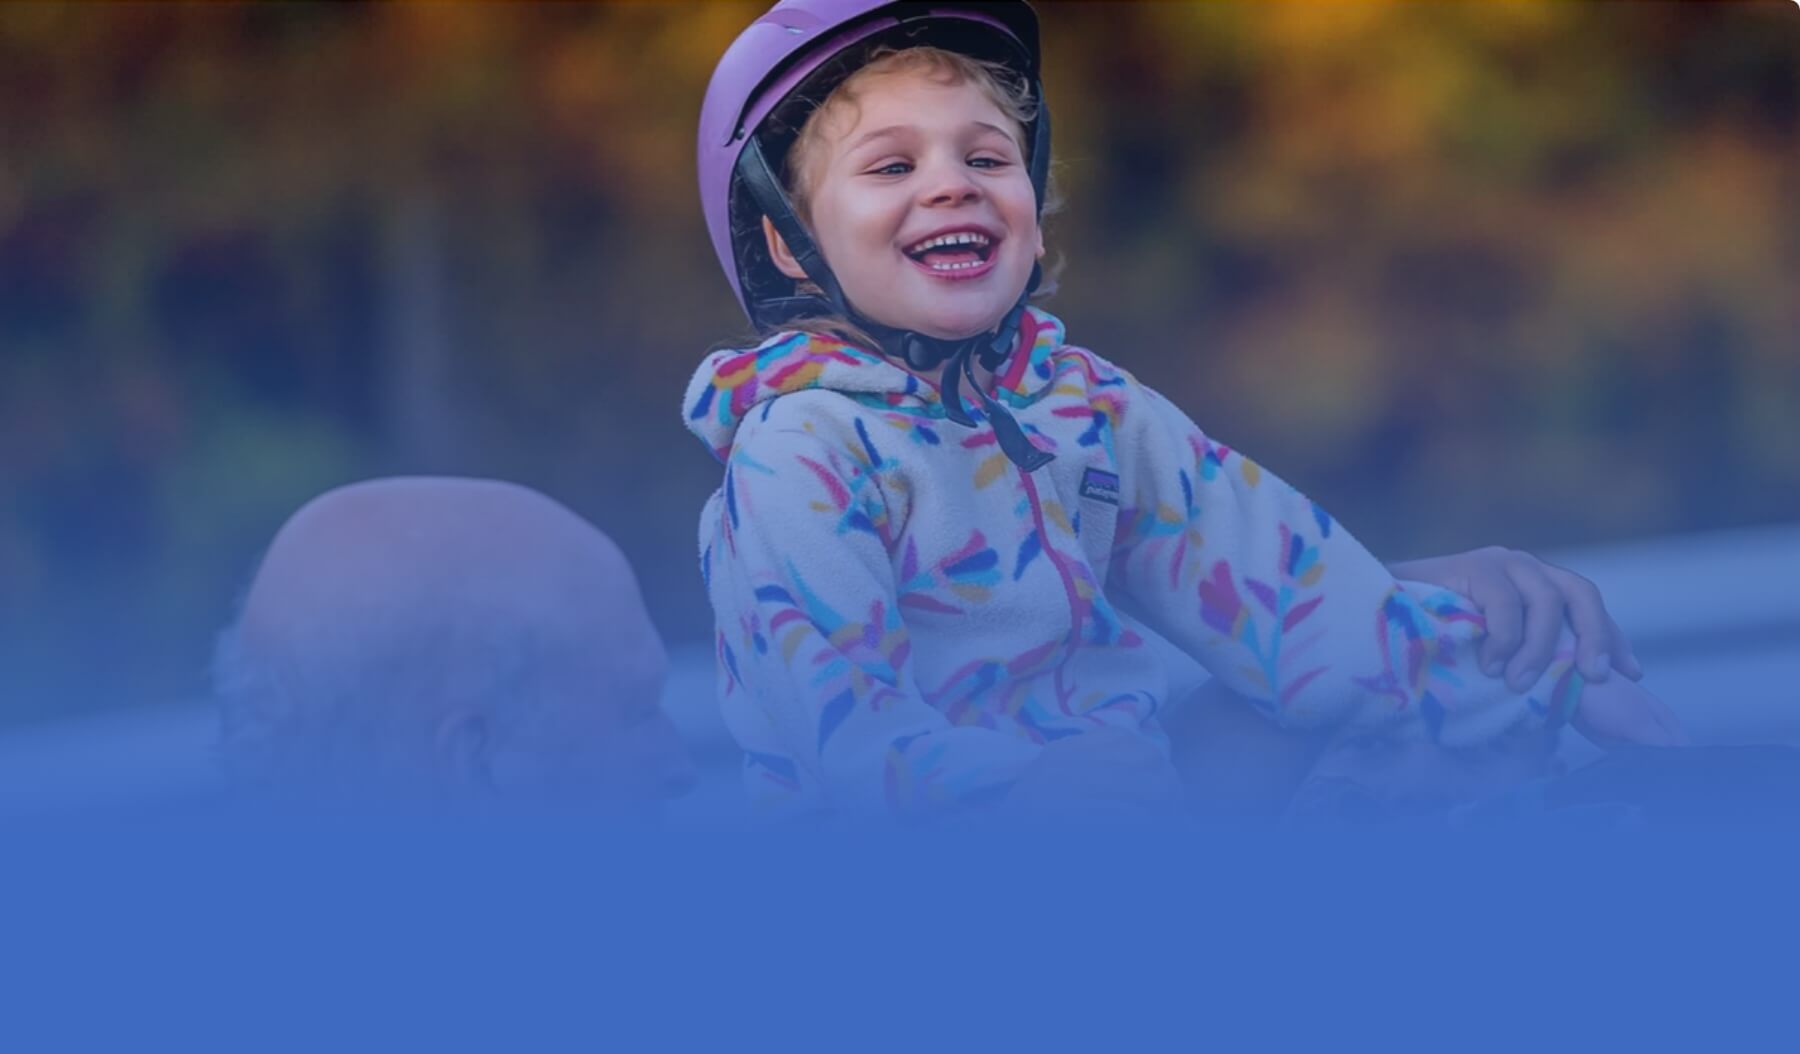 Child riding horse smiling